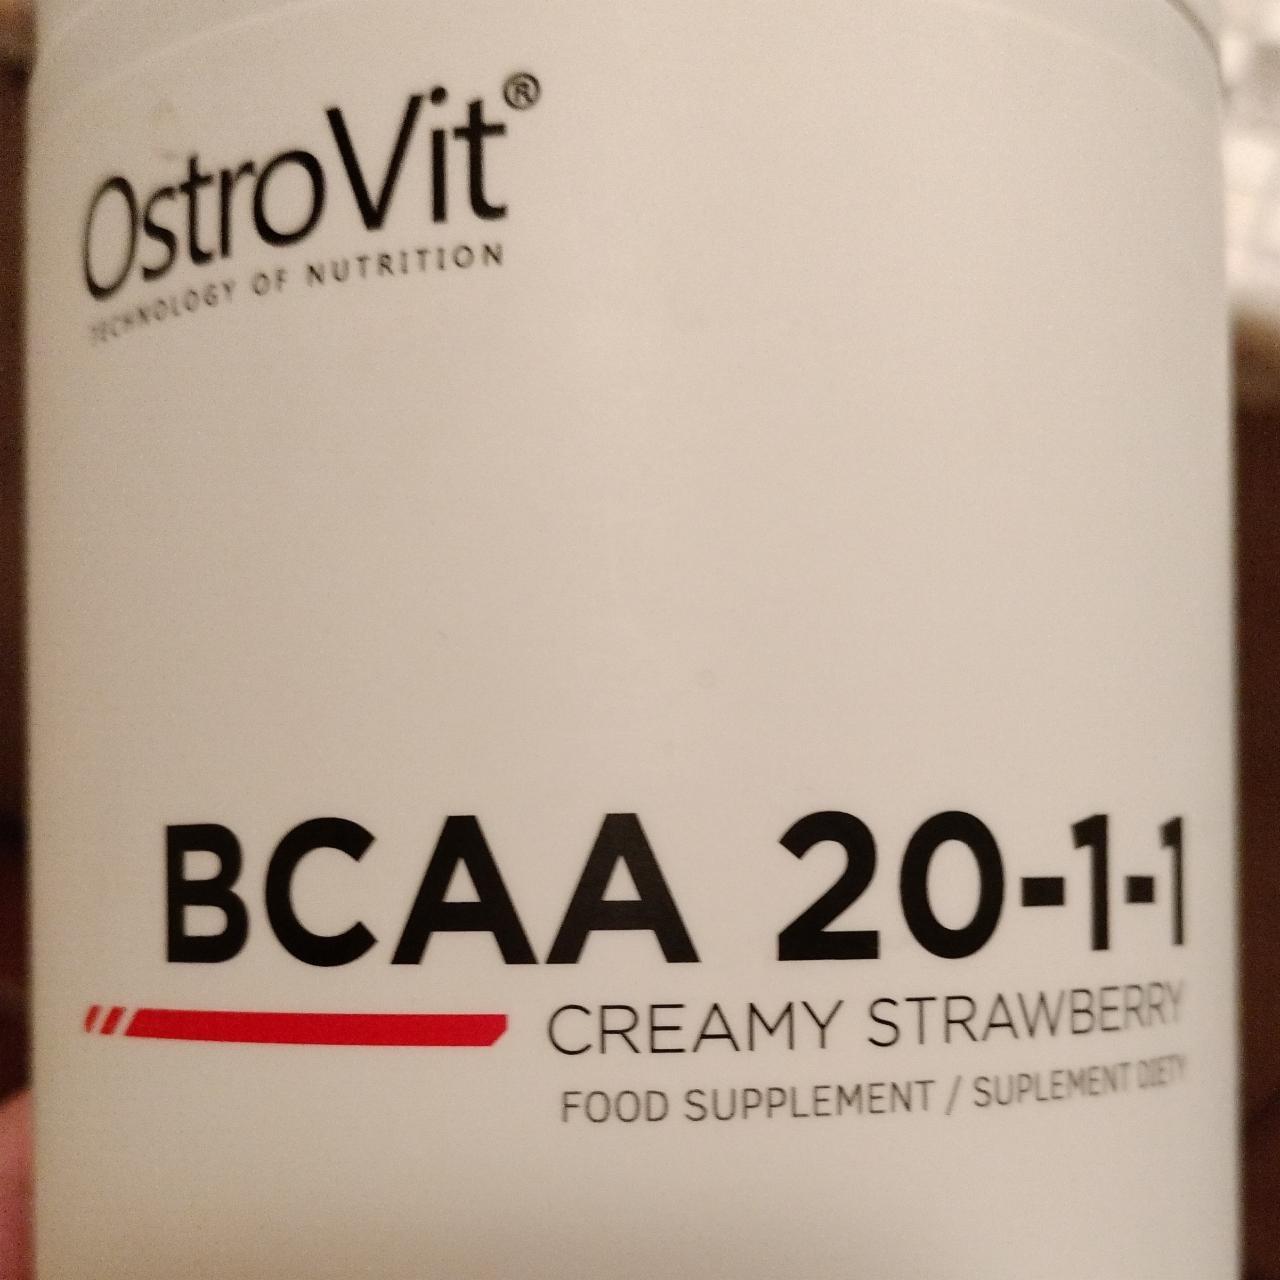 Képek - BCAA 20-1-1 Creamy strawberry OstroVit